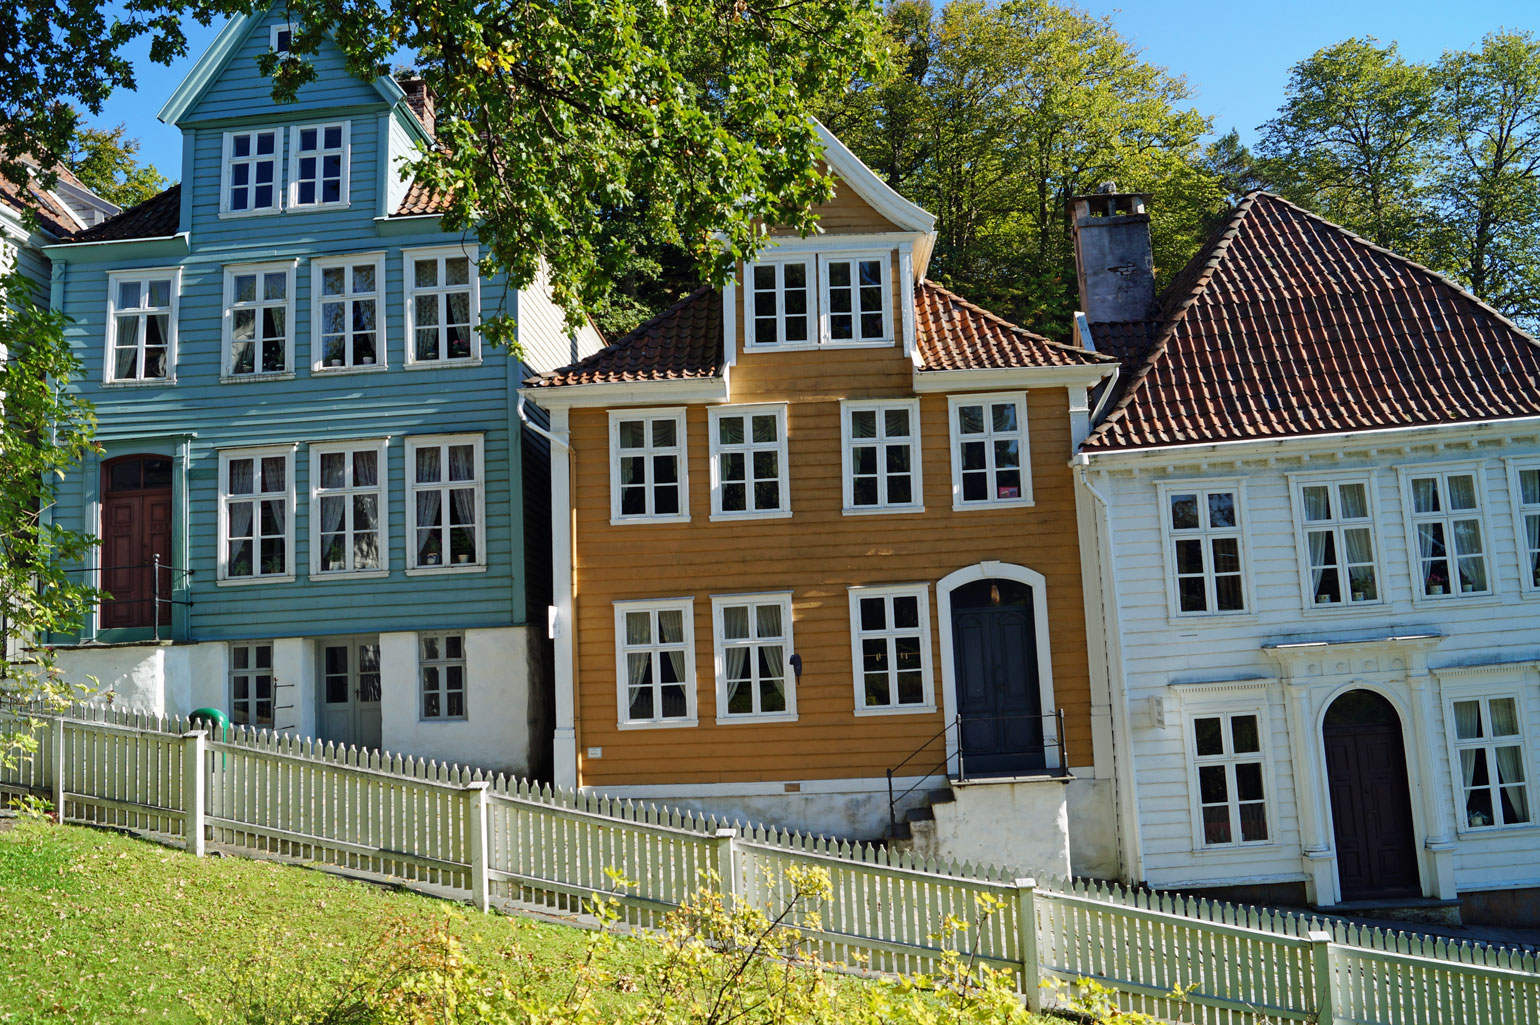 Alte Häuser im Freilichtmuseum Gamle Bergen in Bergen, Norwegen - Highlights in Bergen